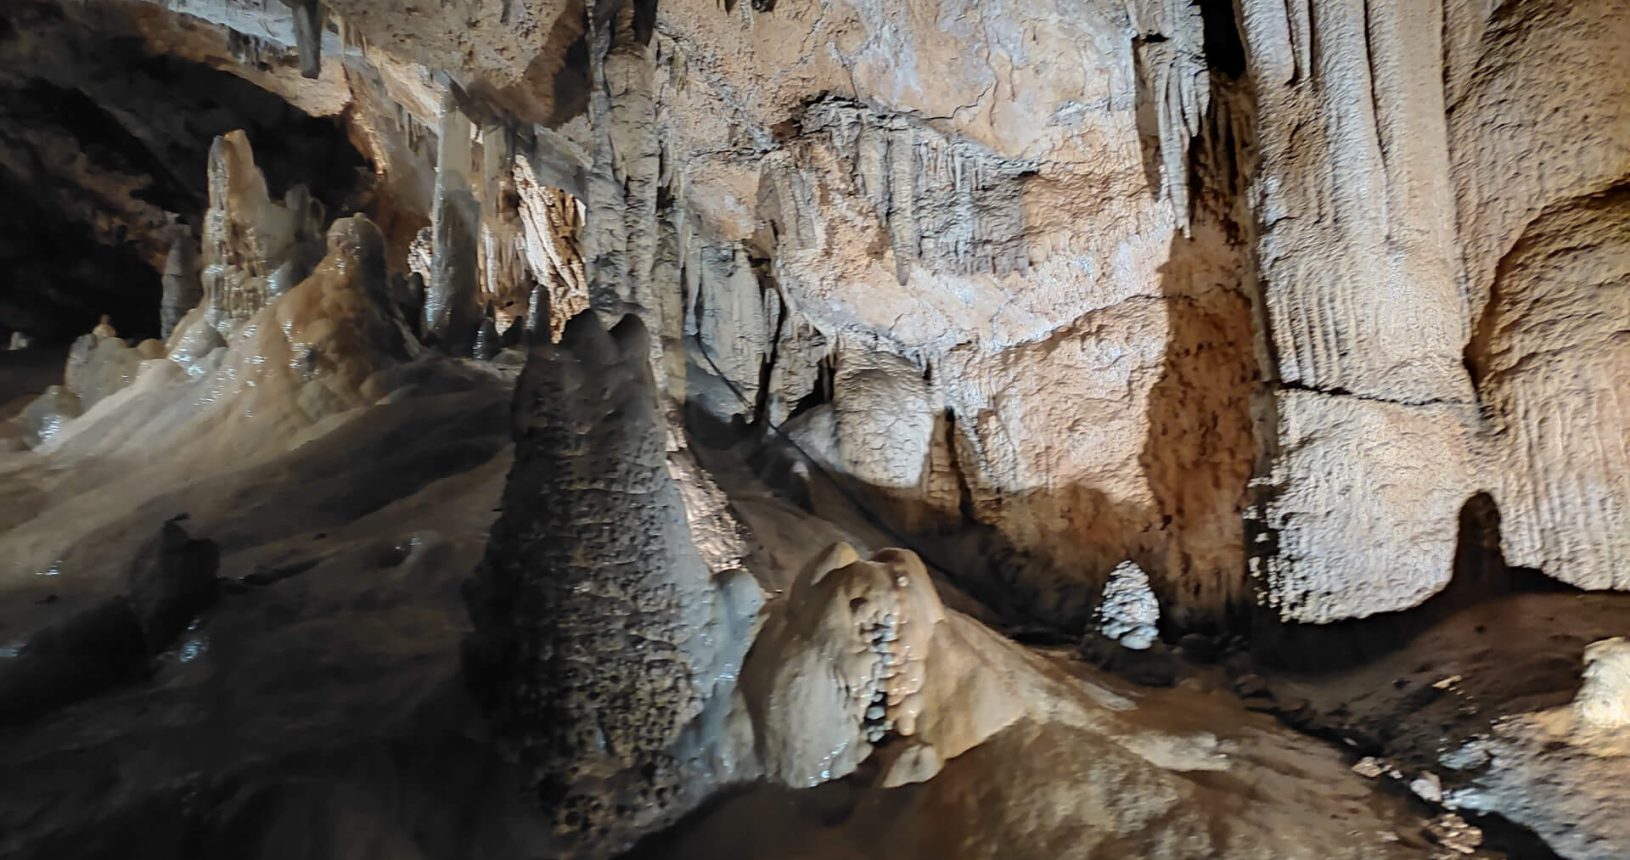 Massive creatures in Lipa Cave